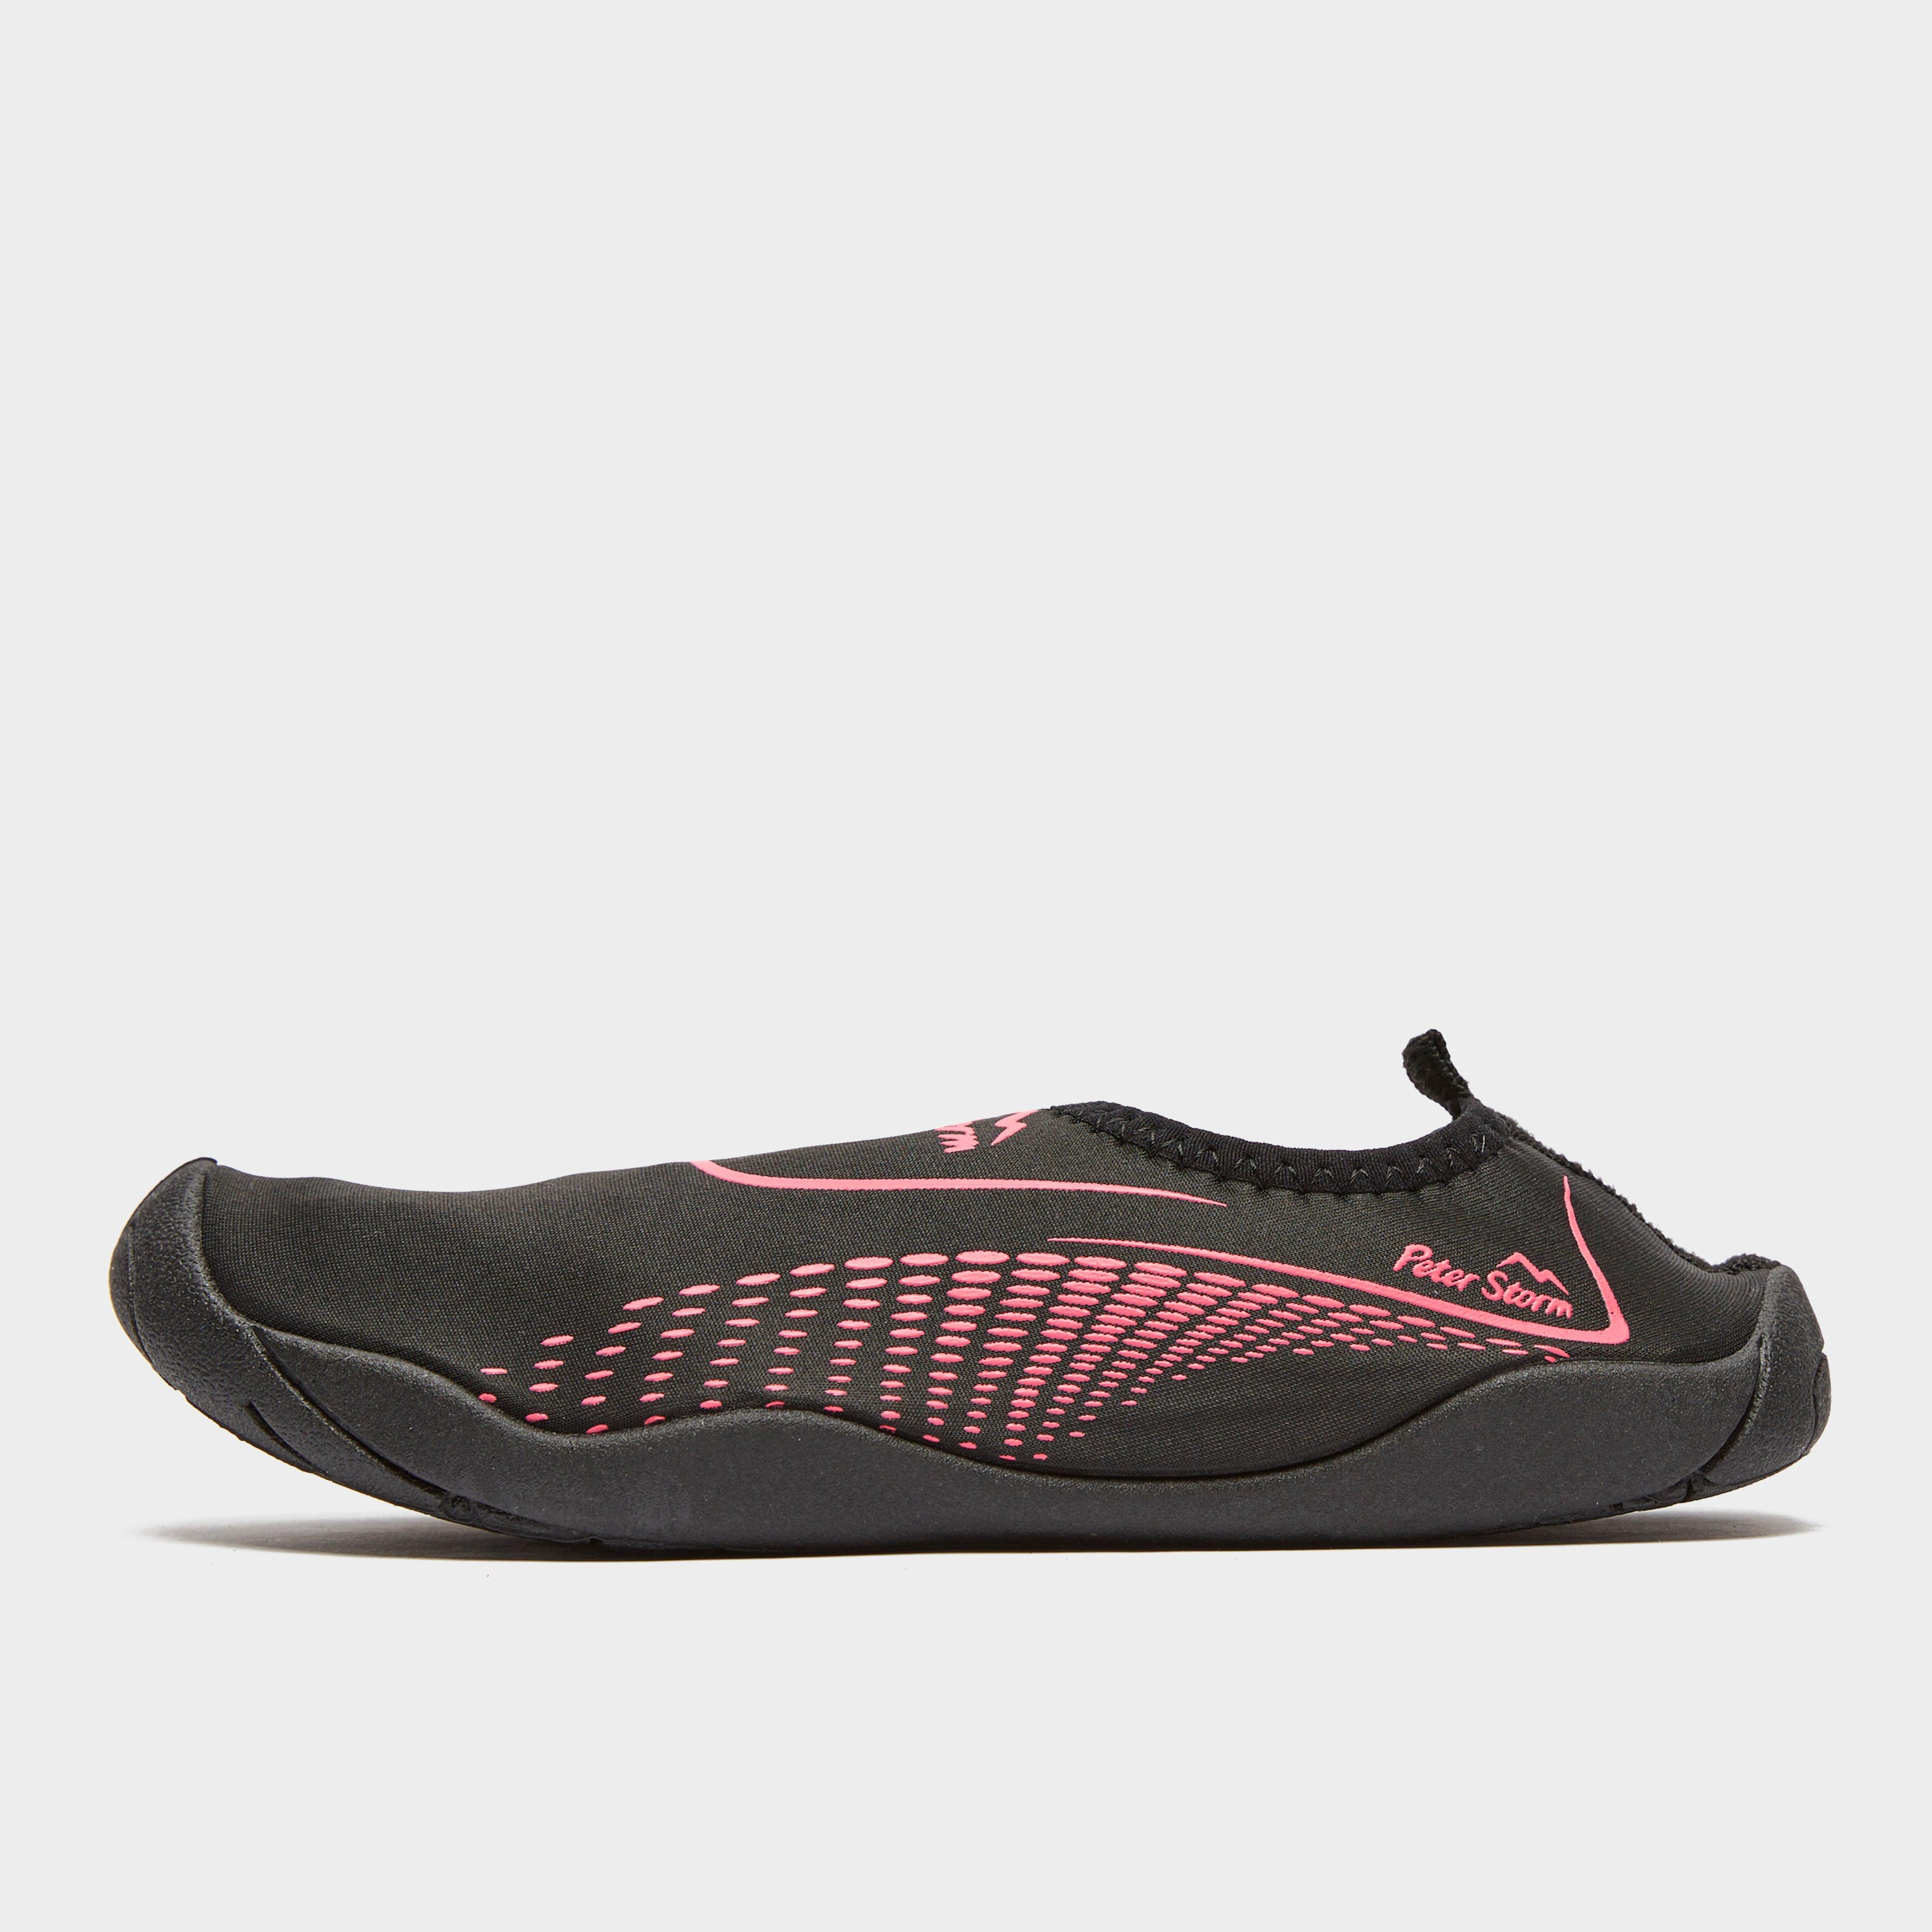 Peter Storm Kids Newquay Aqua Water Shoes - Black/pink  Black/pink